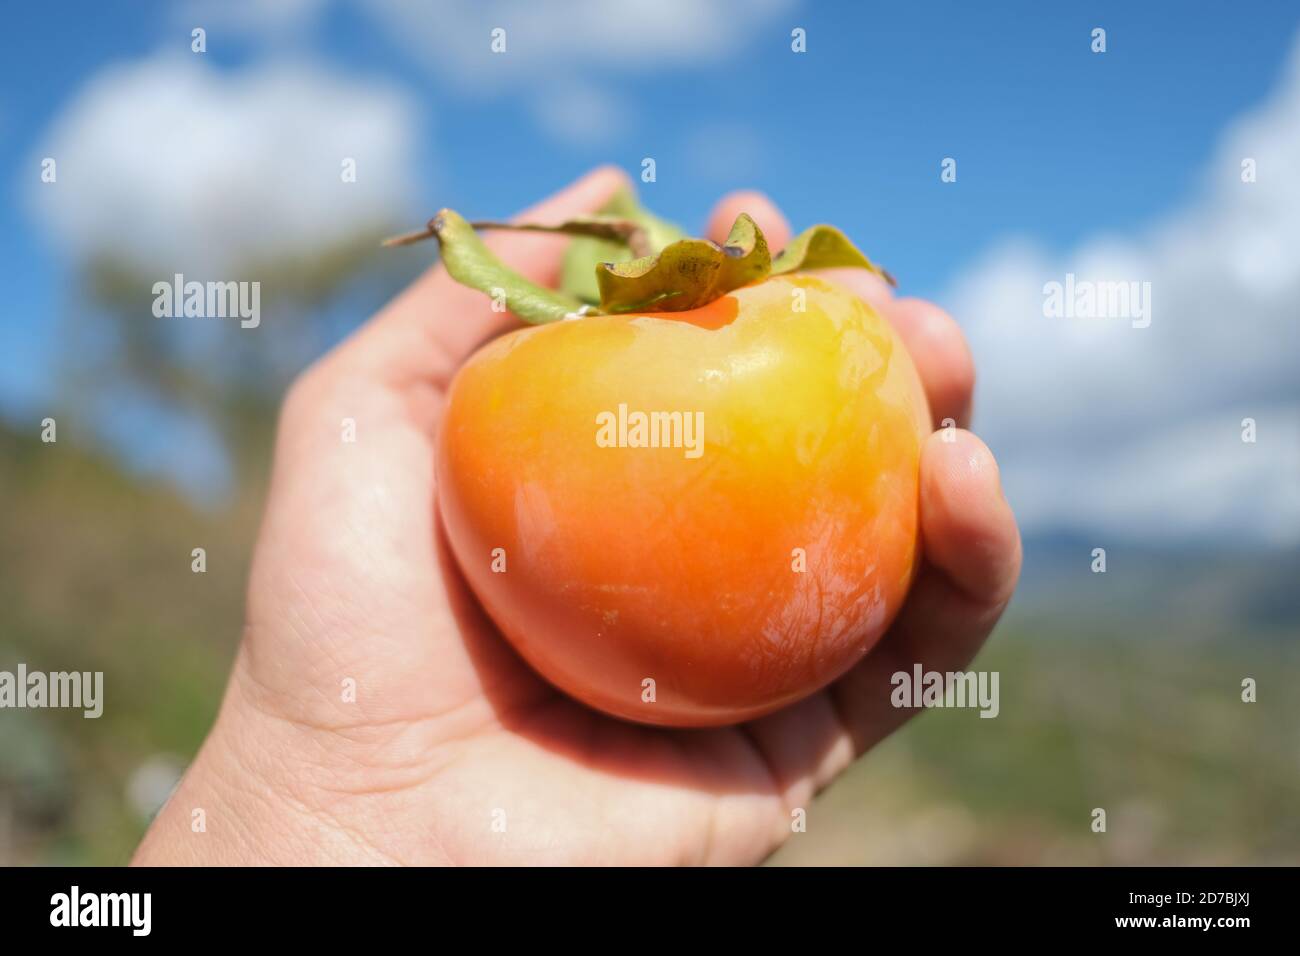 Mano contadina tenere una gustosa frutta parsimmon arancio su luminoso sfondo blu cielo Foto Stock